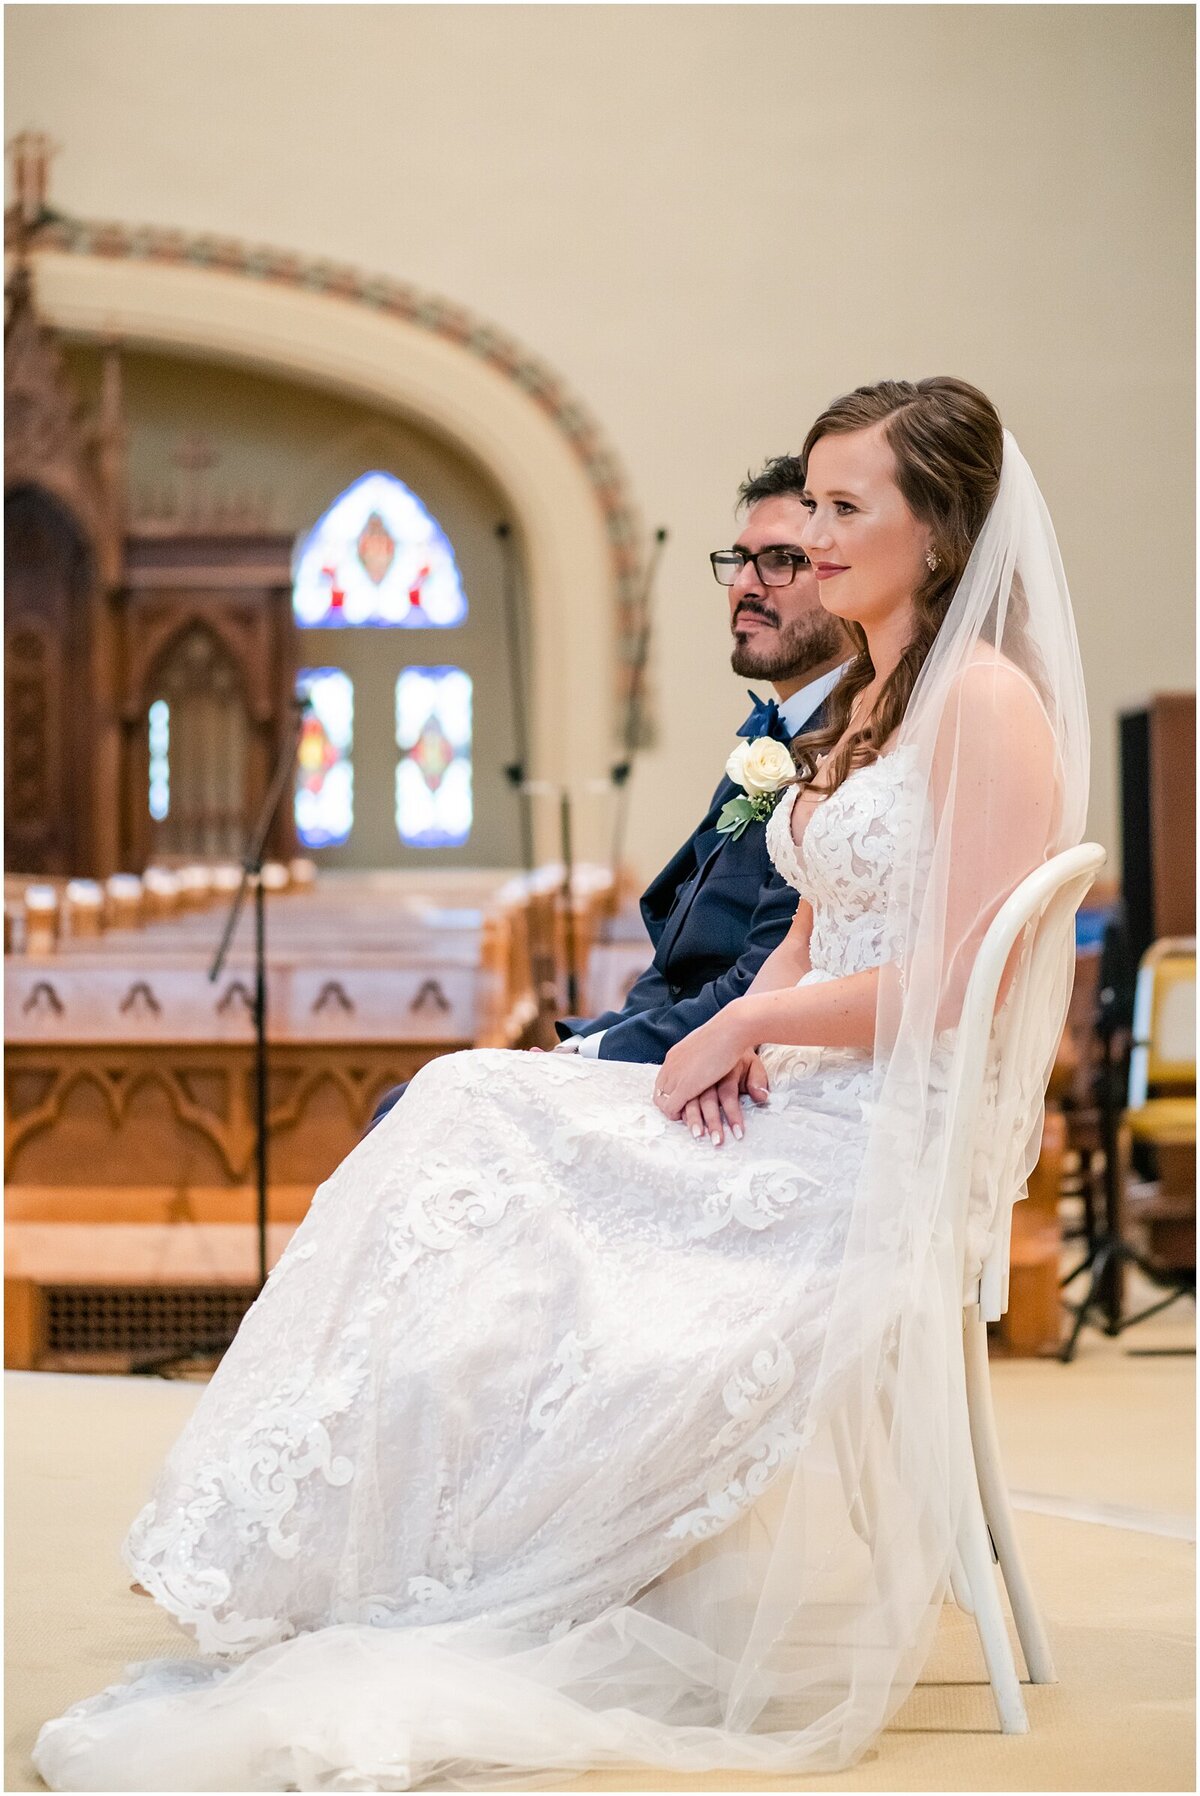 Melissa & Arturo Photography | The Veranda Wedding - Alyssa & Albert - Ceremony 155